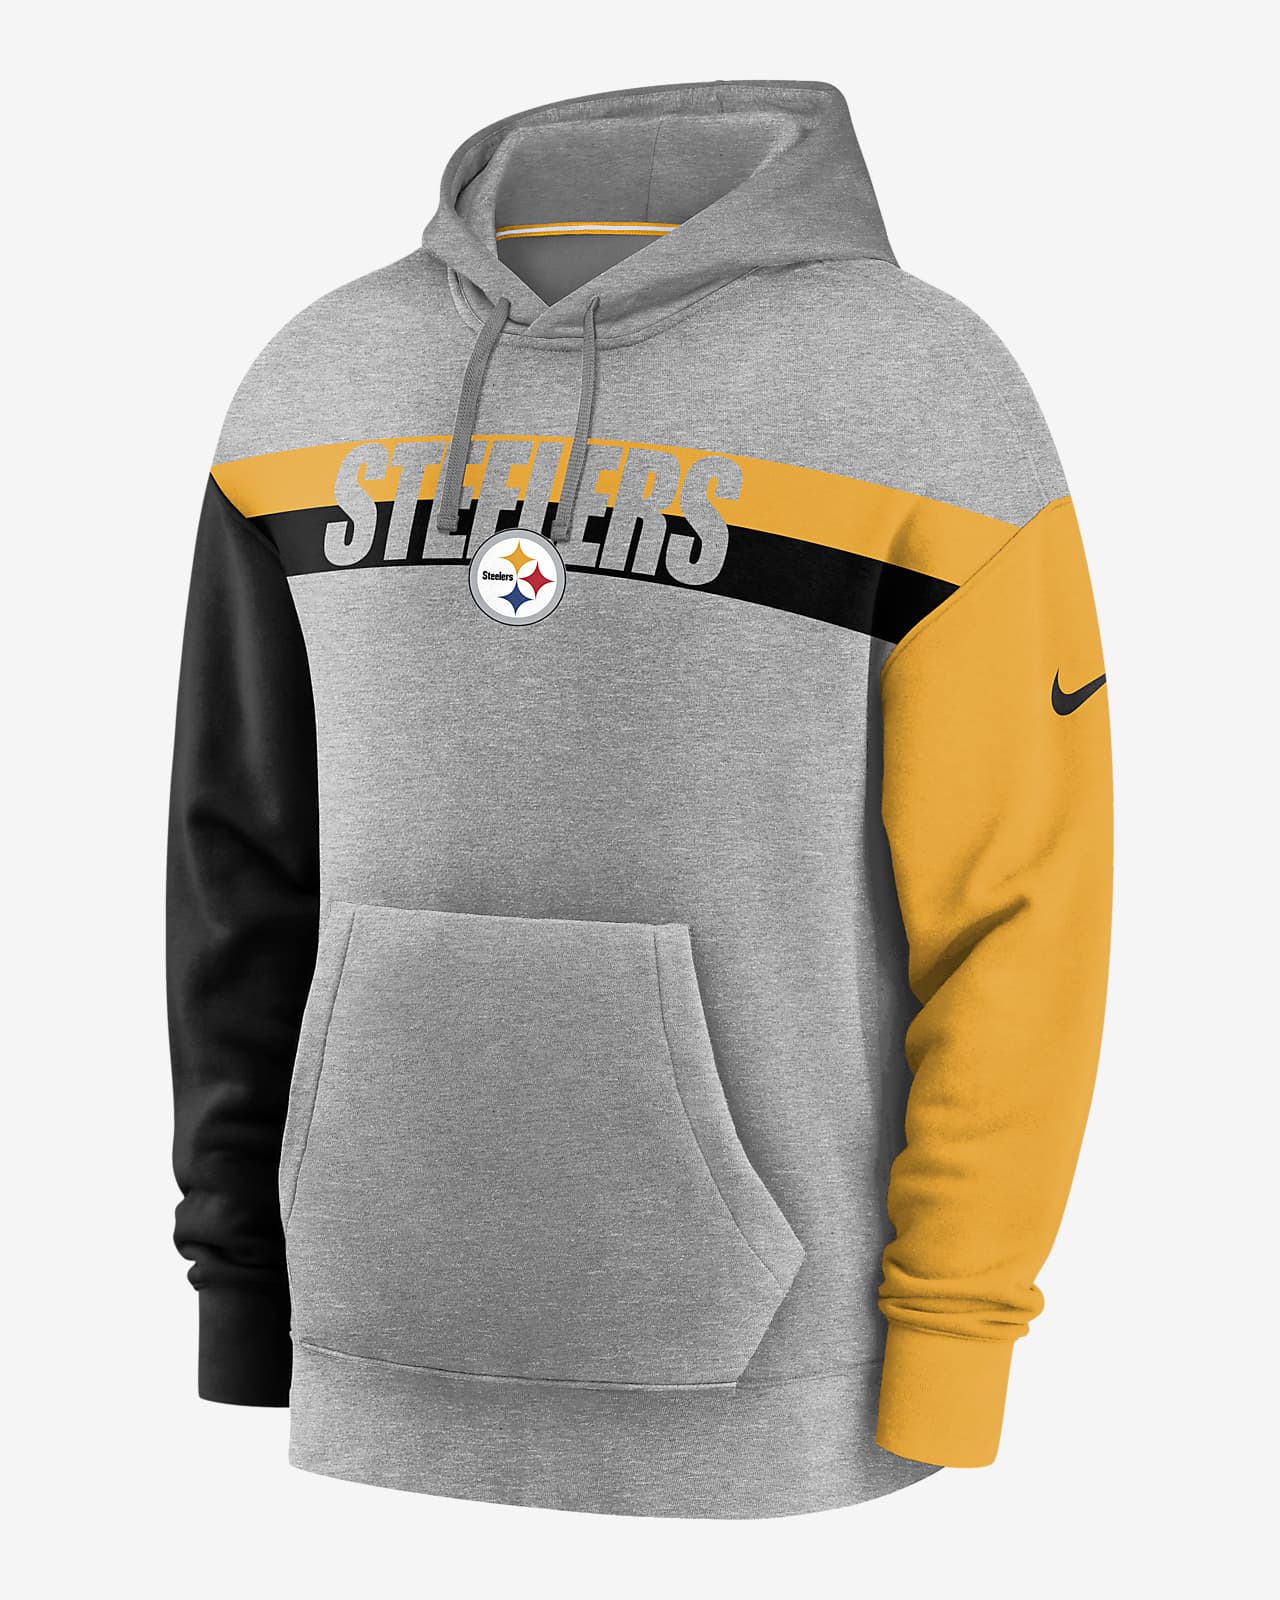 Sudadera con capucha para hombre Nike Wordmark (NFL Steelers). Nike.com